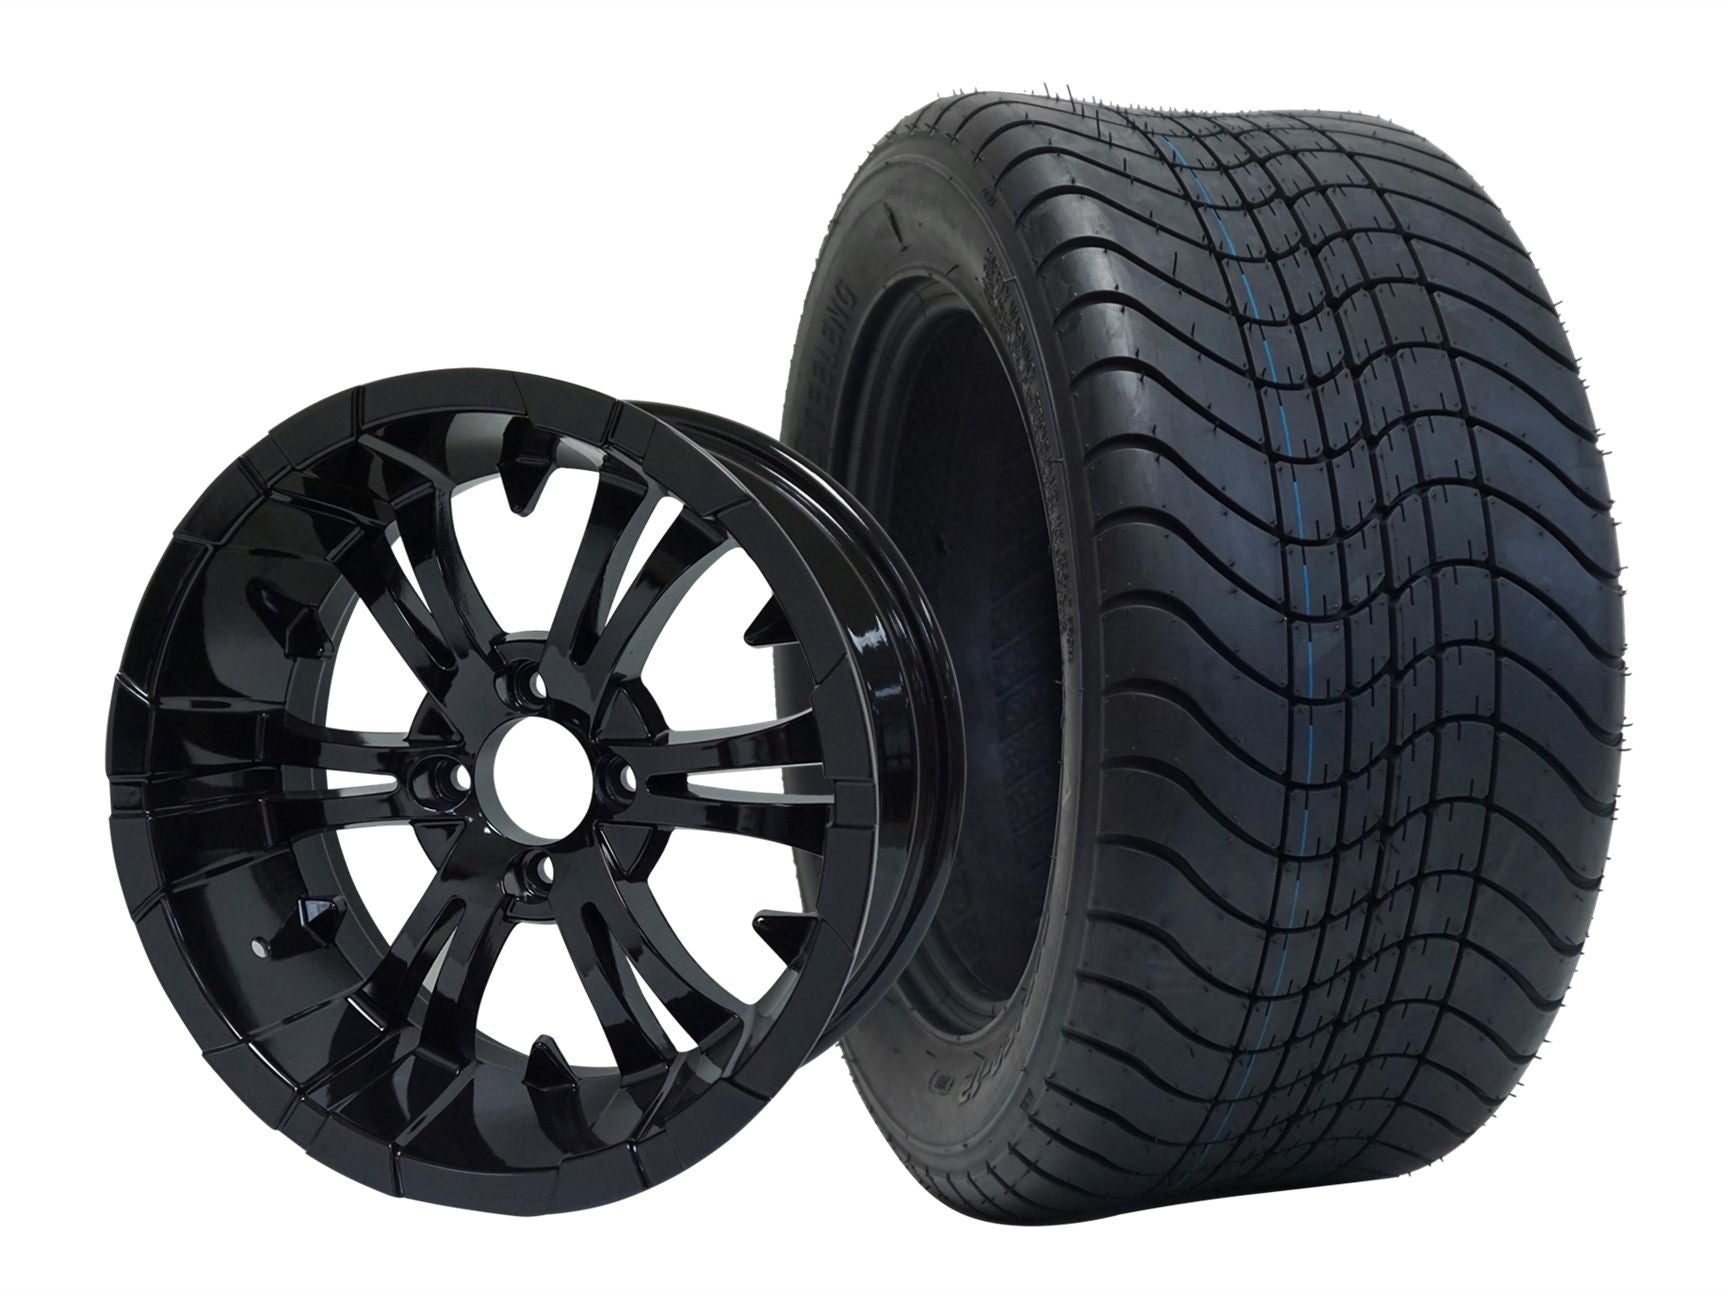 SGC 12" Vampire Glossy Black Wheel - Aluminum Alloy STEELENG 215/50-12 Comfort Ride Street Tire DOT approved WH1242-TR1213